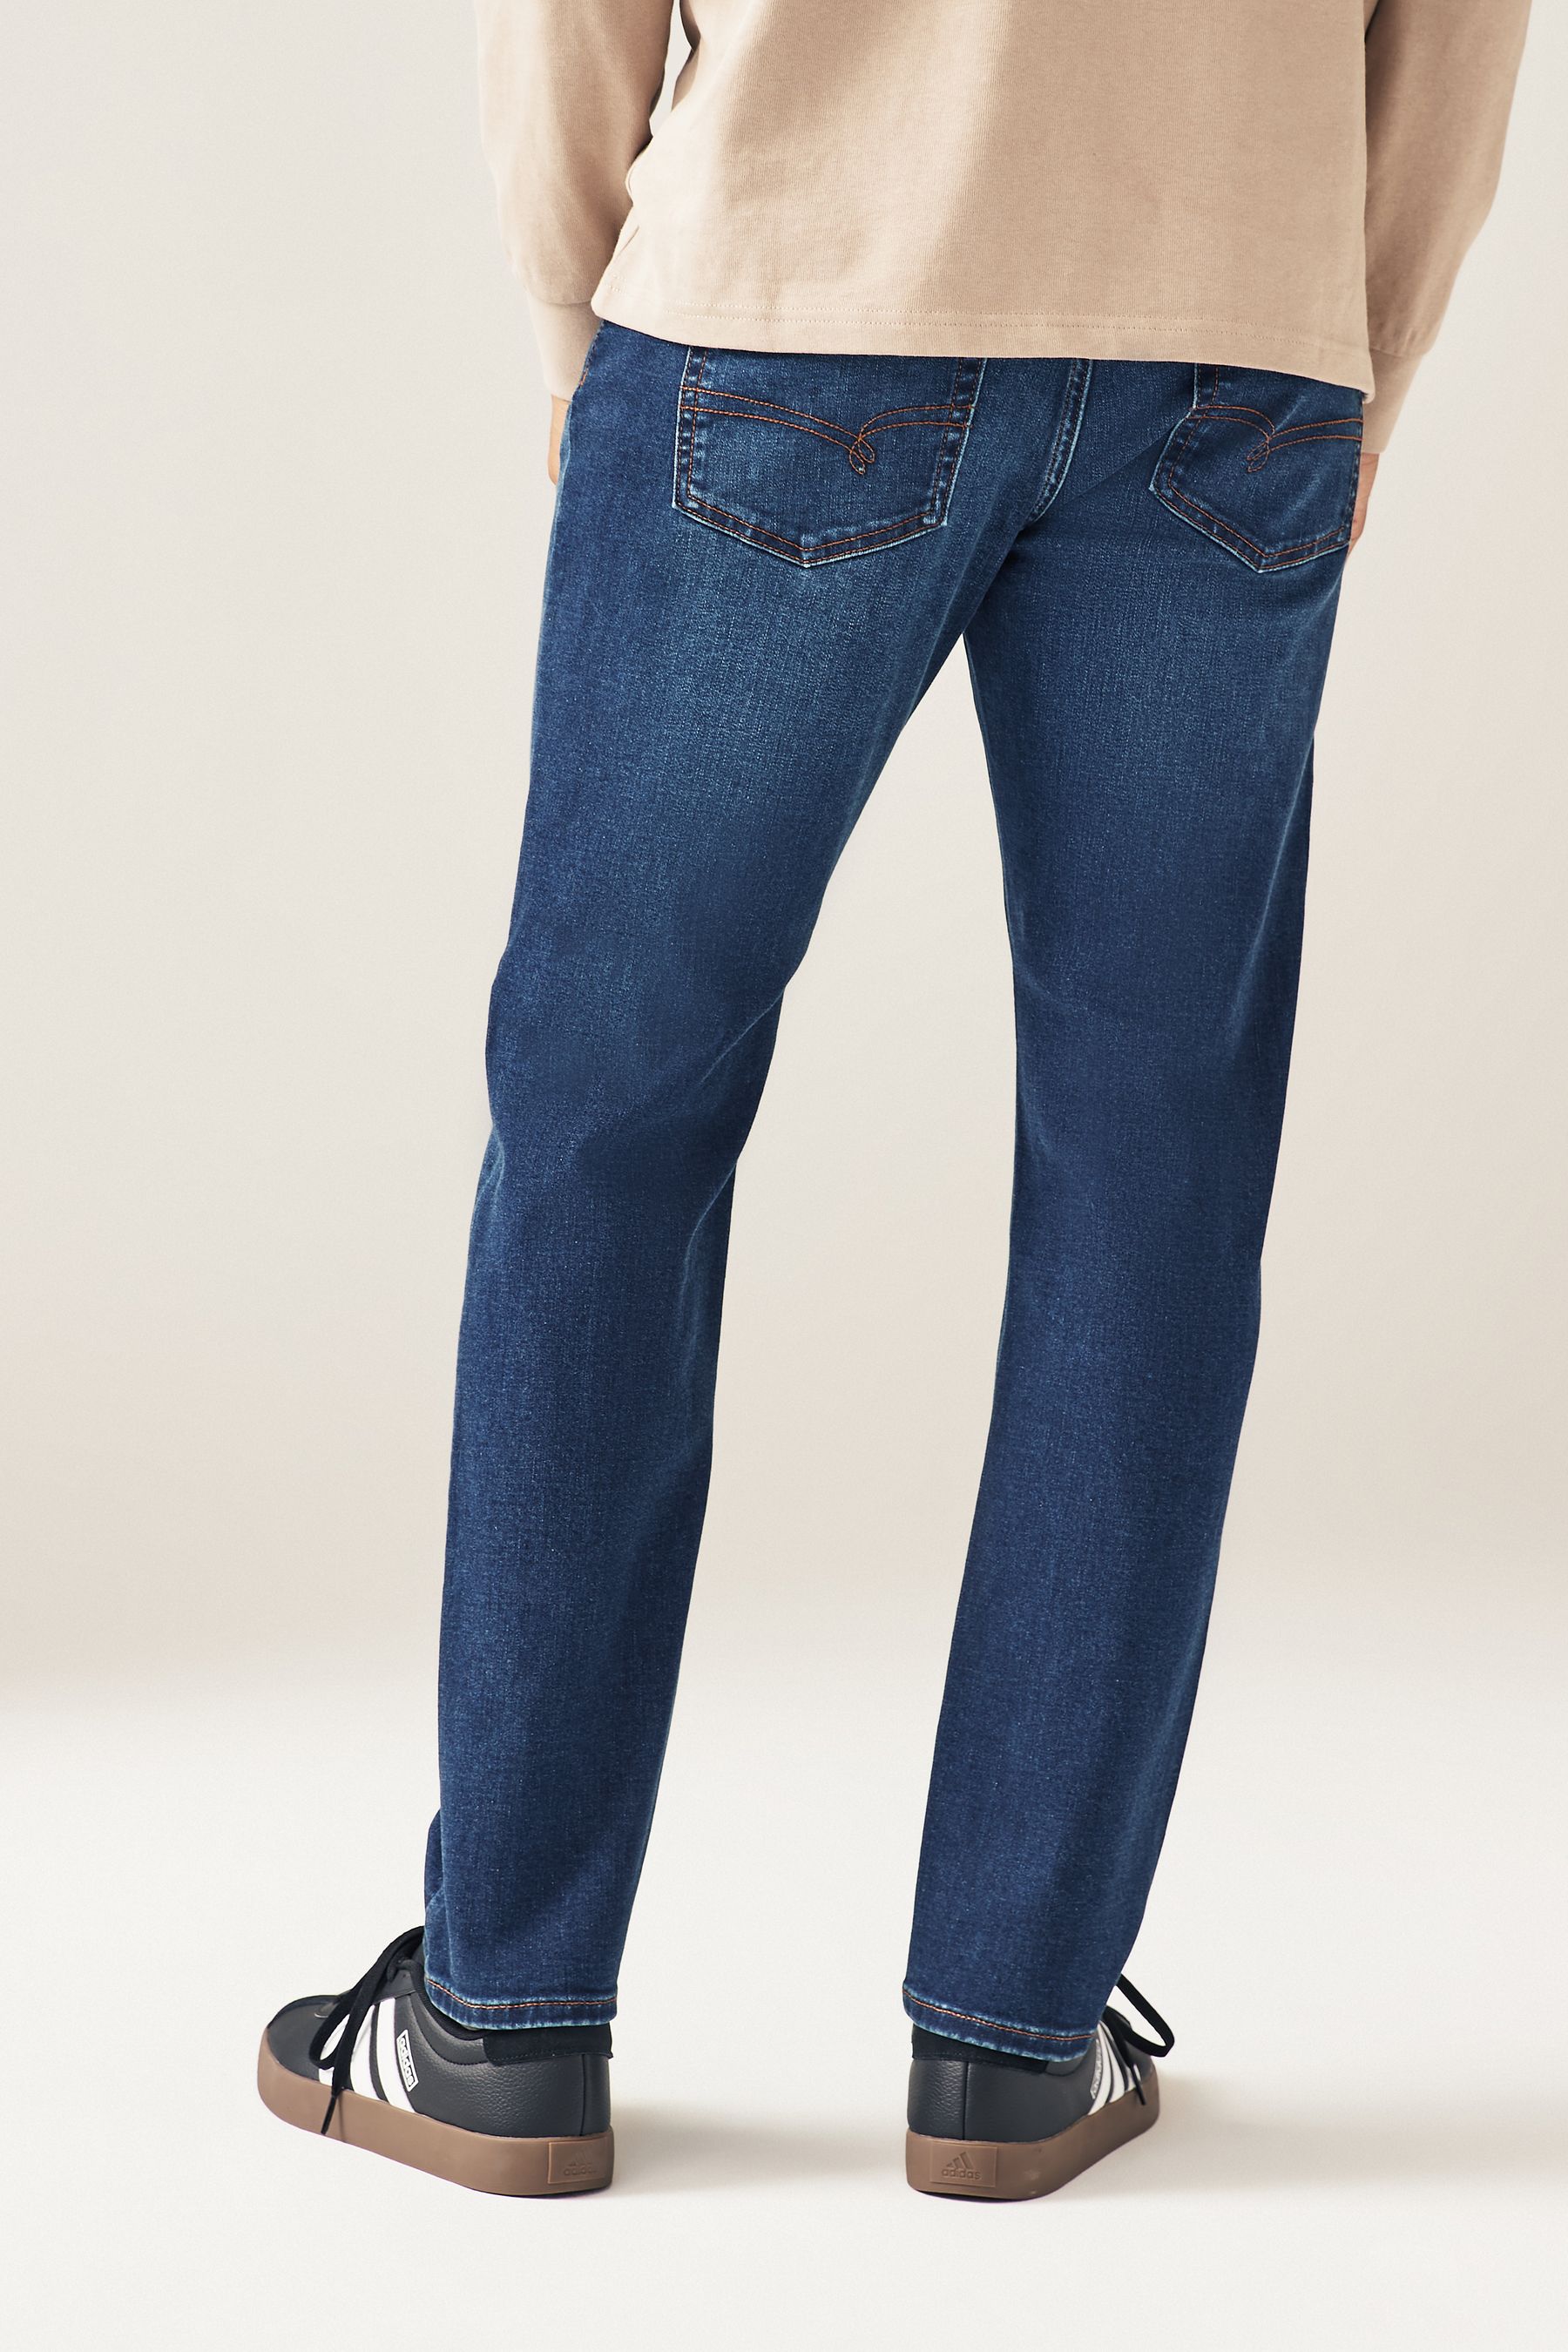 Buy Blue Slim Fit Motion Flex Jeans from the Next UK online shop